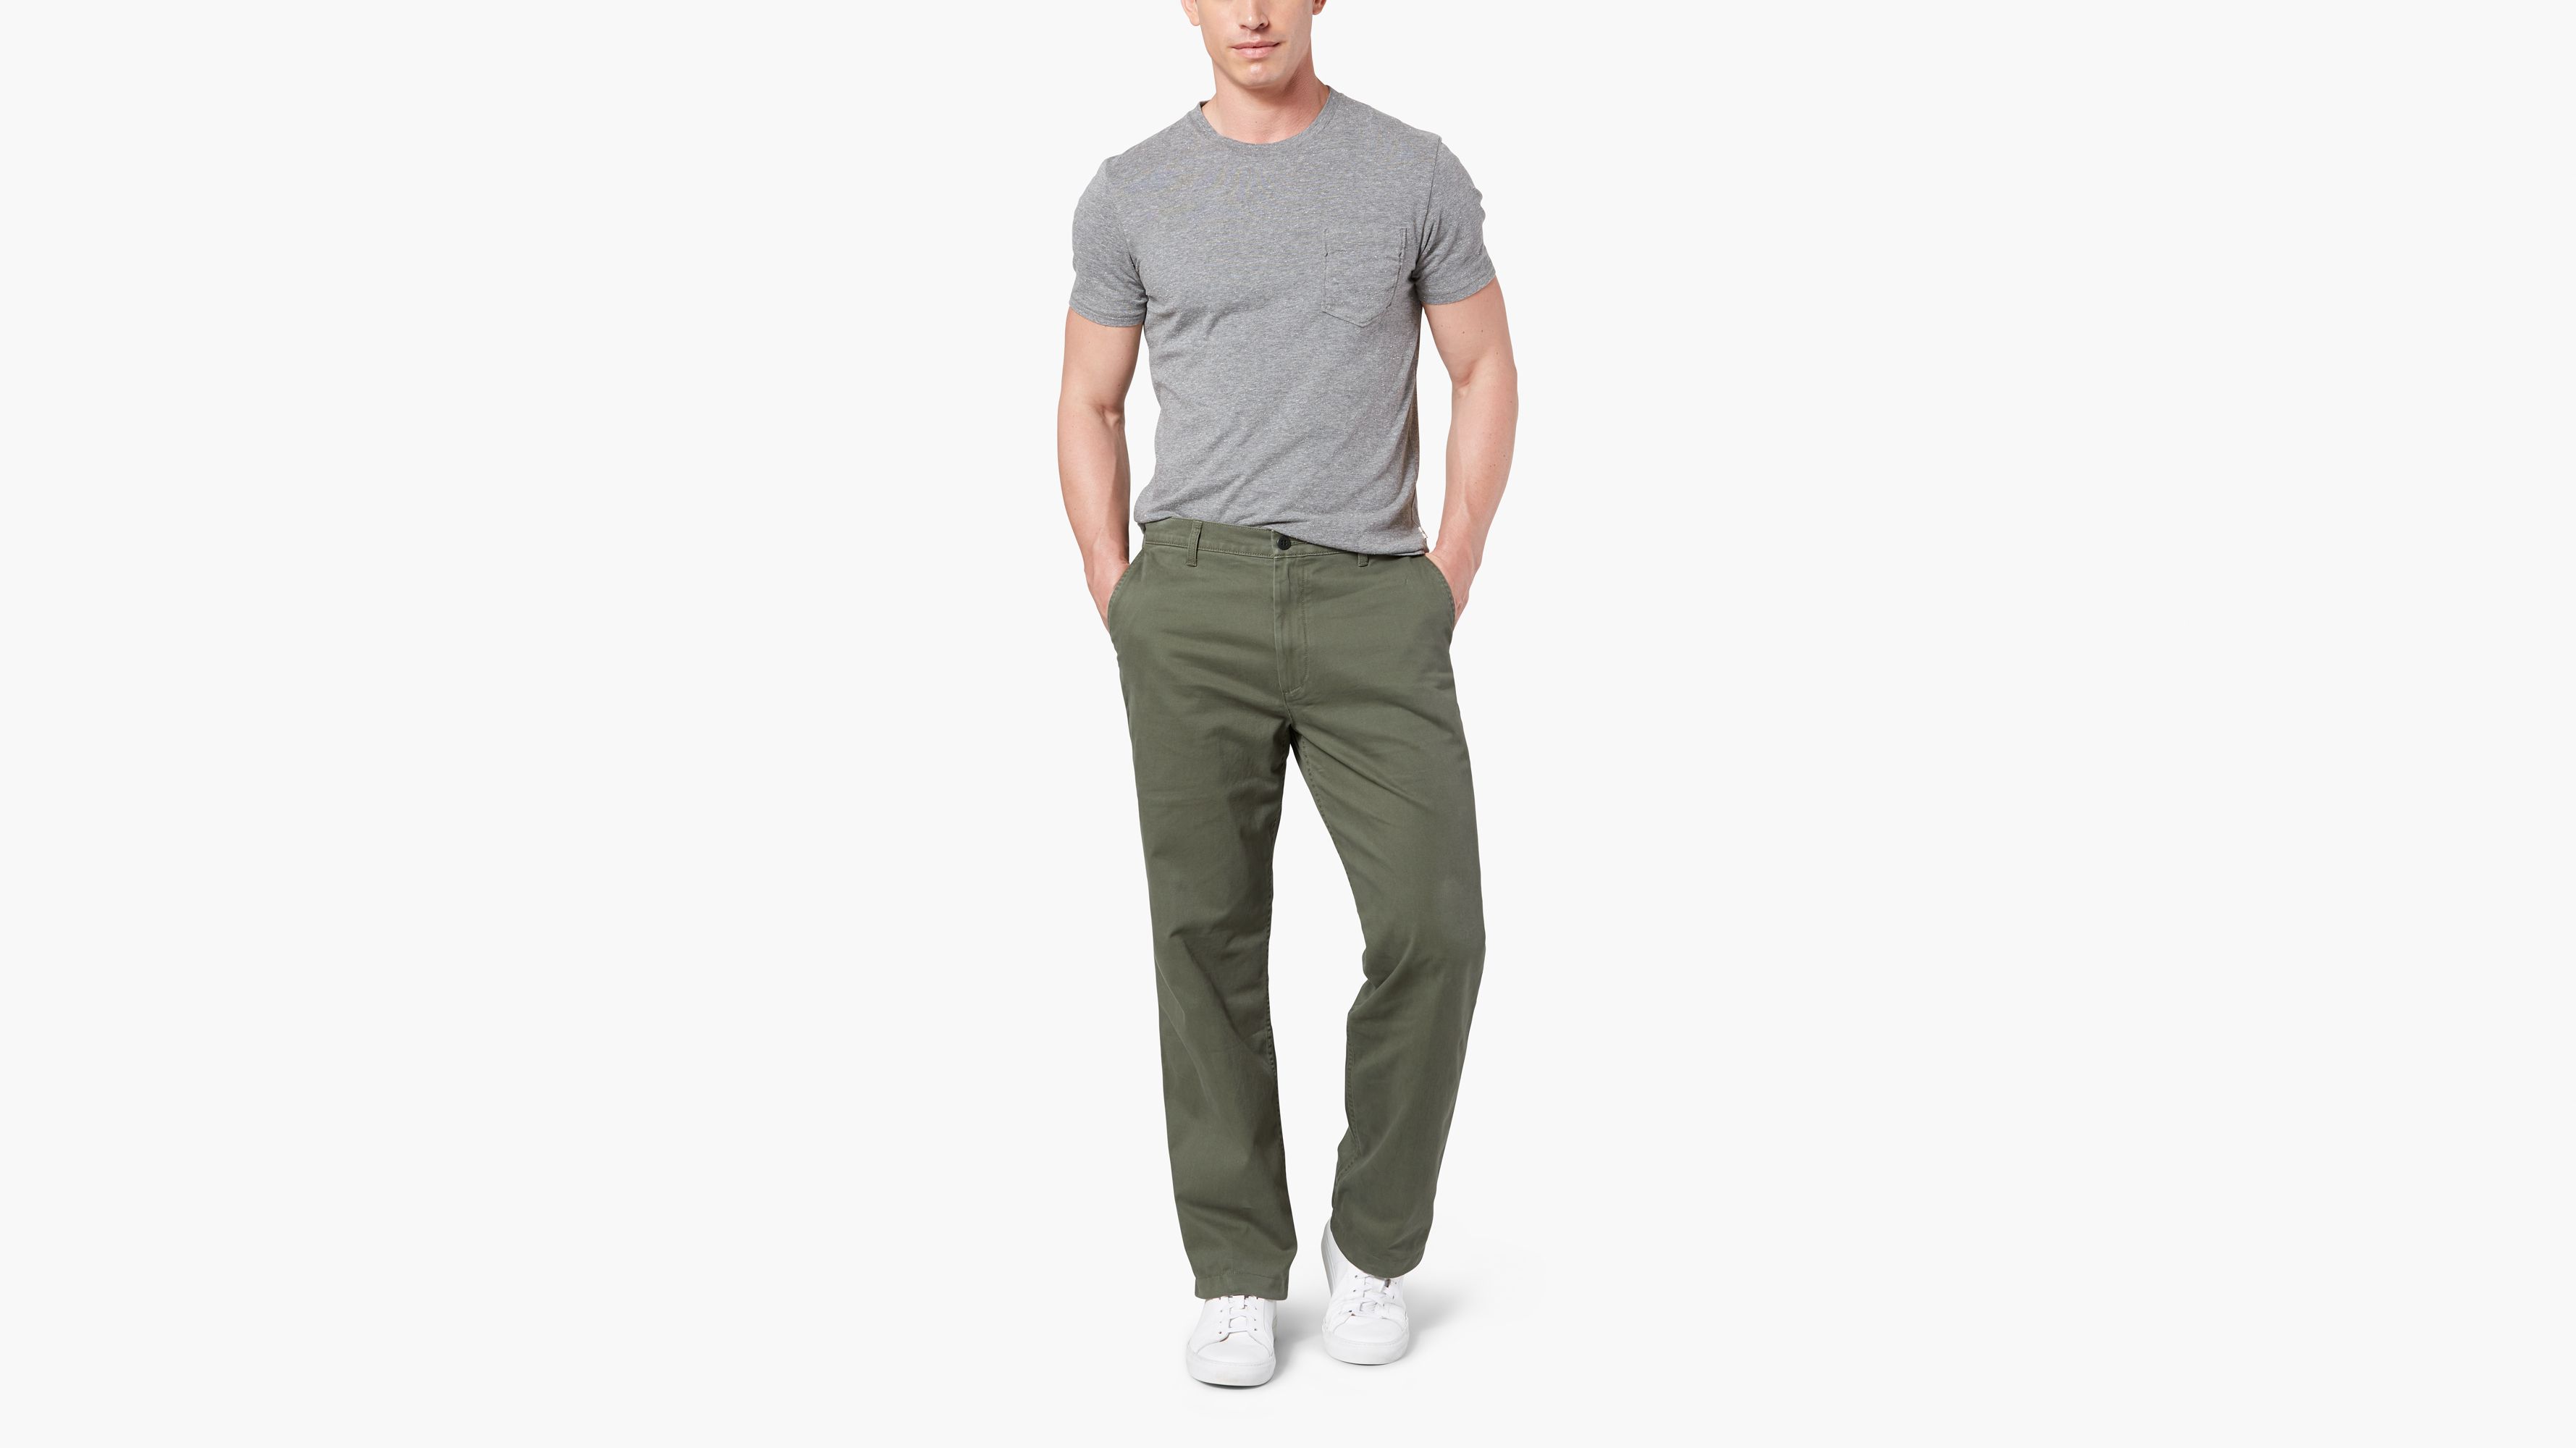 Washed Khaki Pants, Classic Fit - Green 